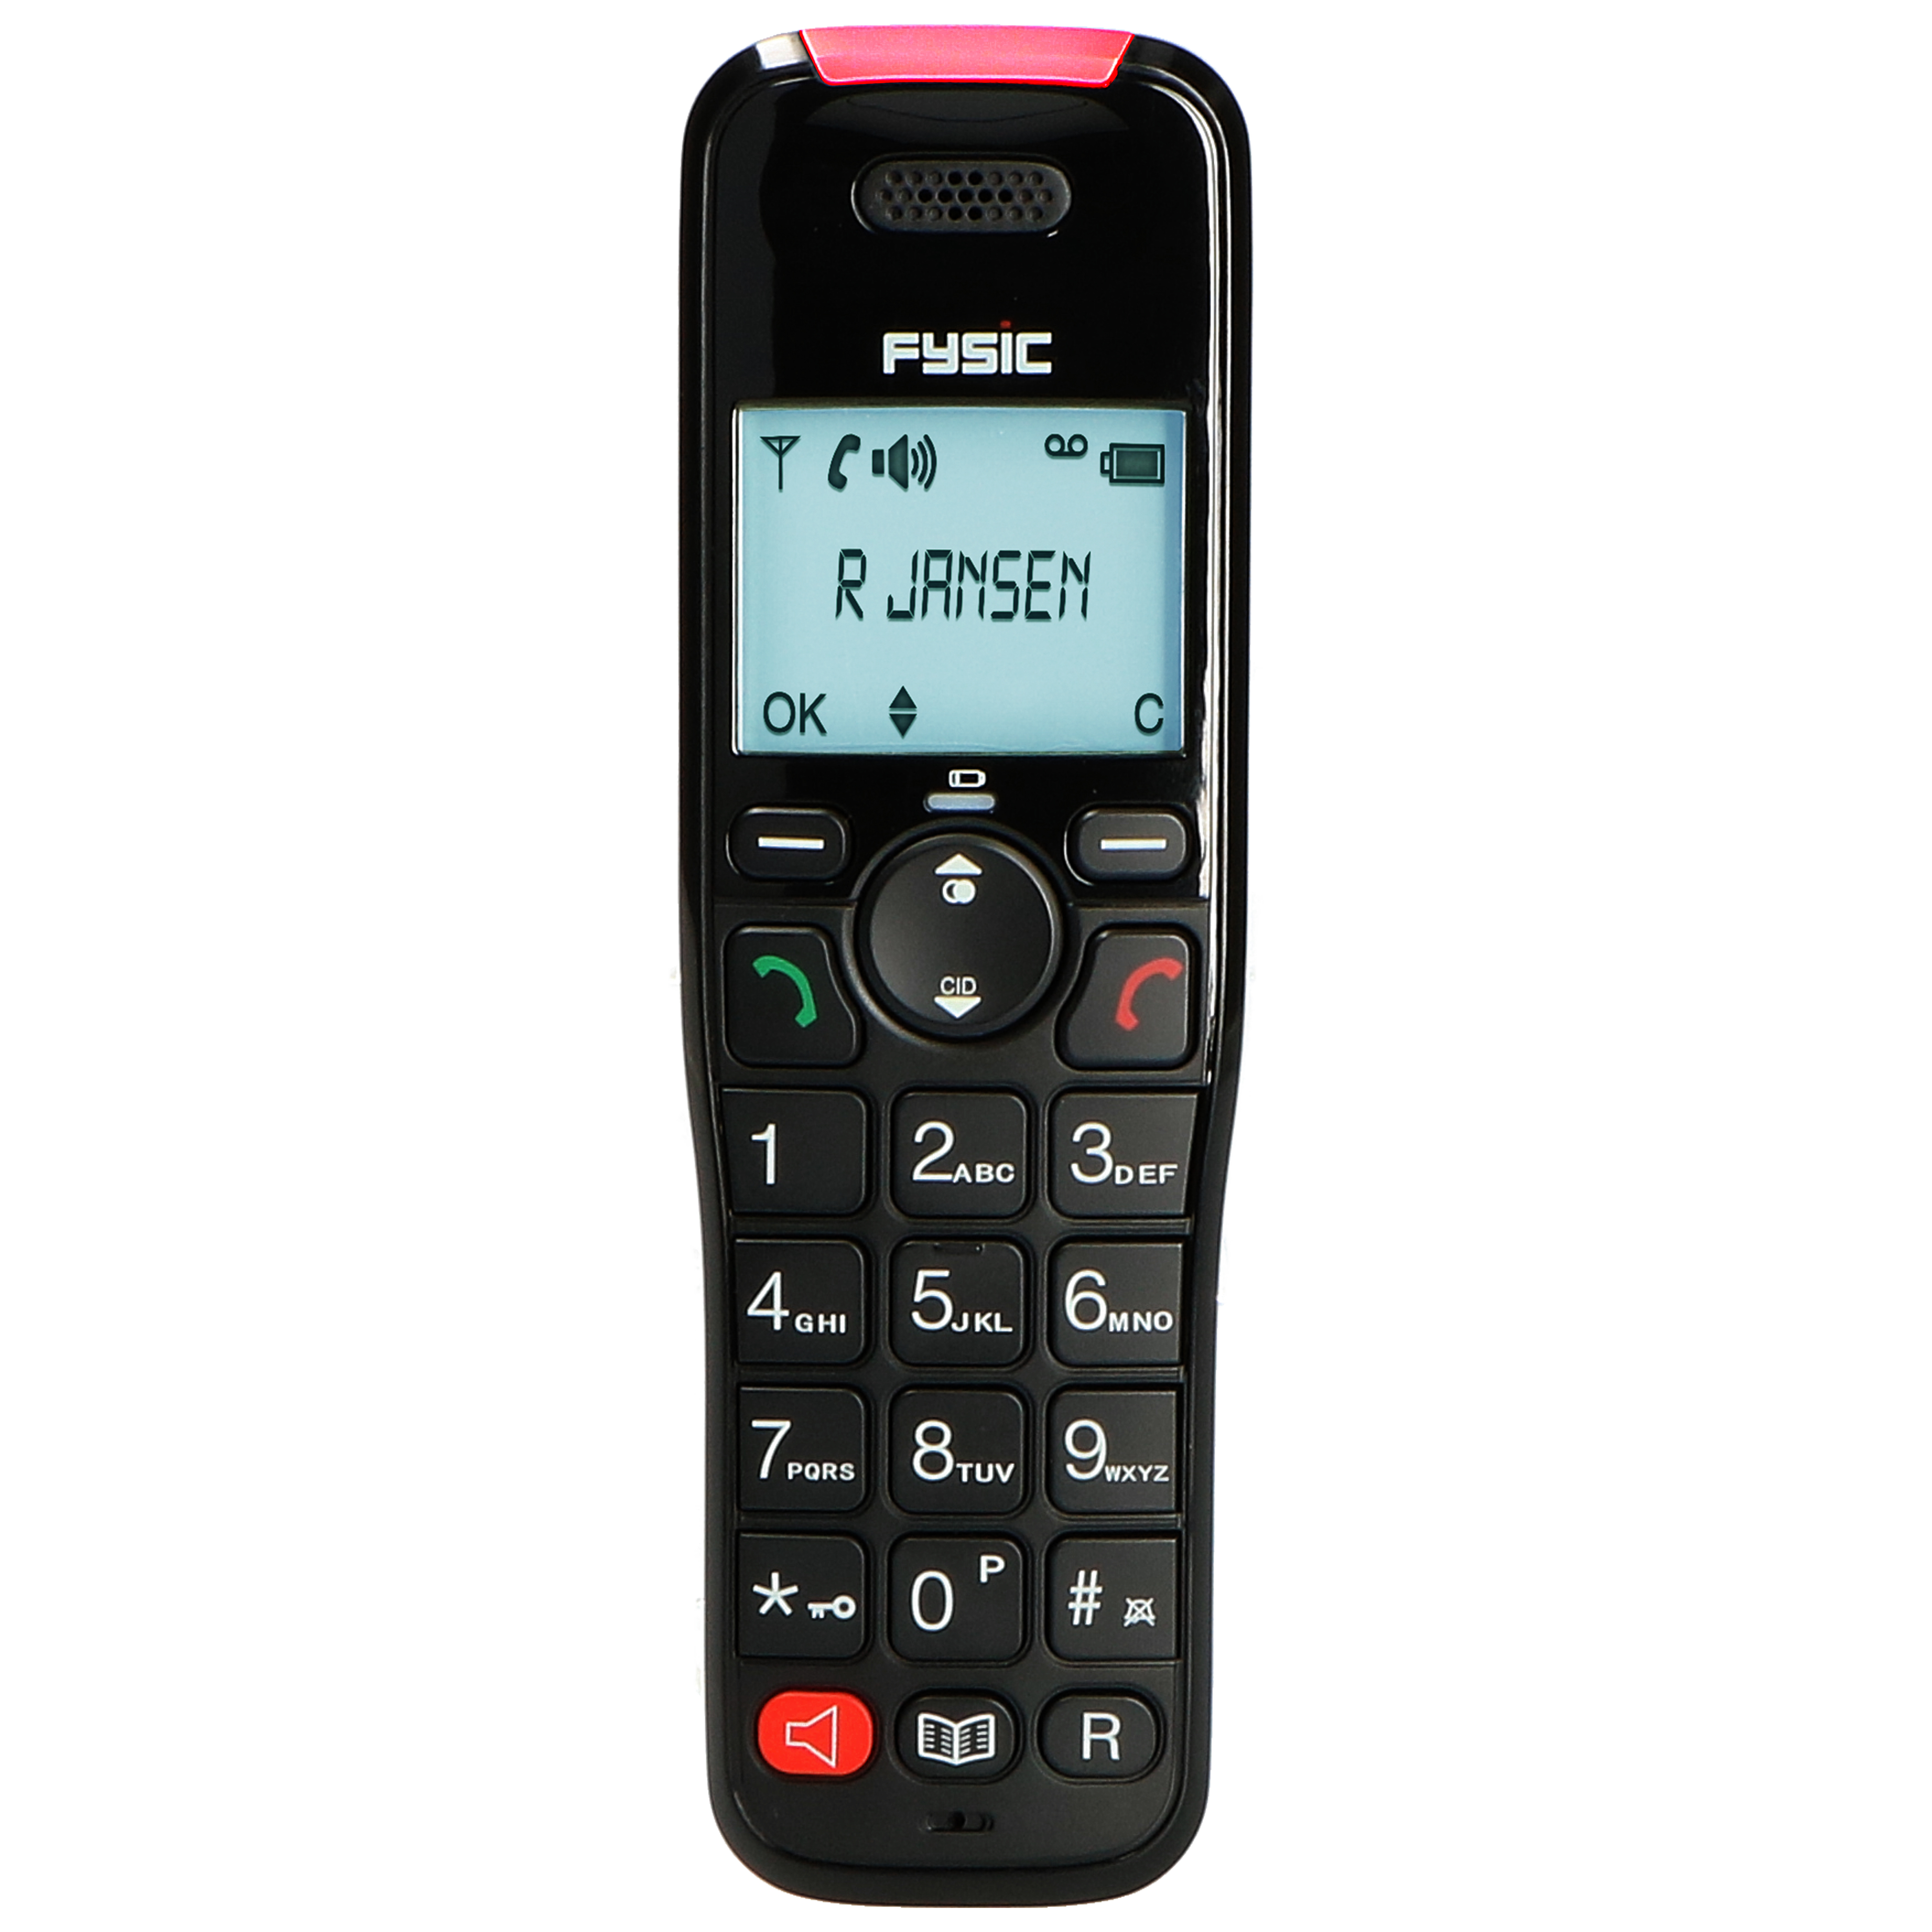 Klingelverstärker,großen Tasten,SOS-Taste FX-8025 - und Handset Seniorentelefon Seniorentelefon FYSIC mit extra Klingelverstärker mit